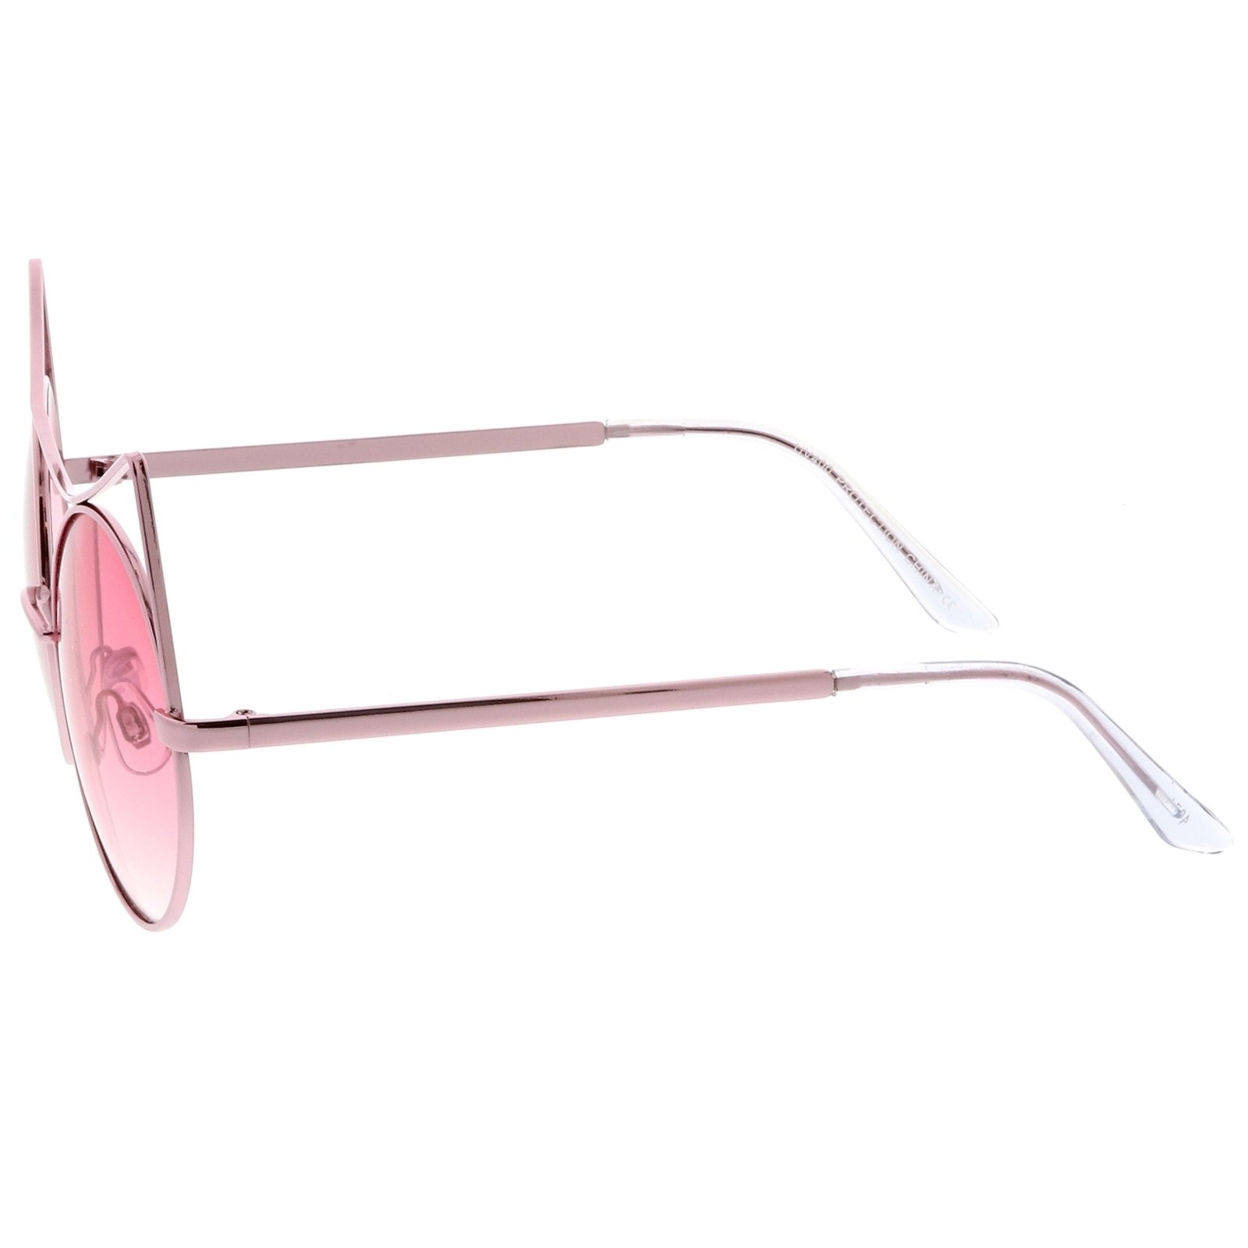 Women's Oversize Open Metal Gradient Round Flat Lens Cat Eye Sunglasses 54mm - Silver / Lavender